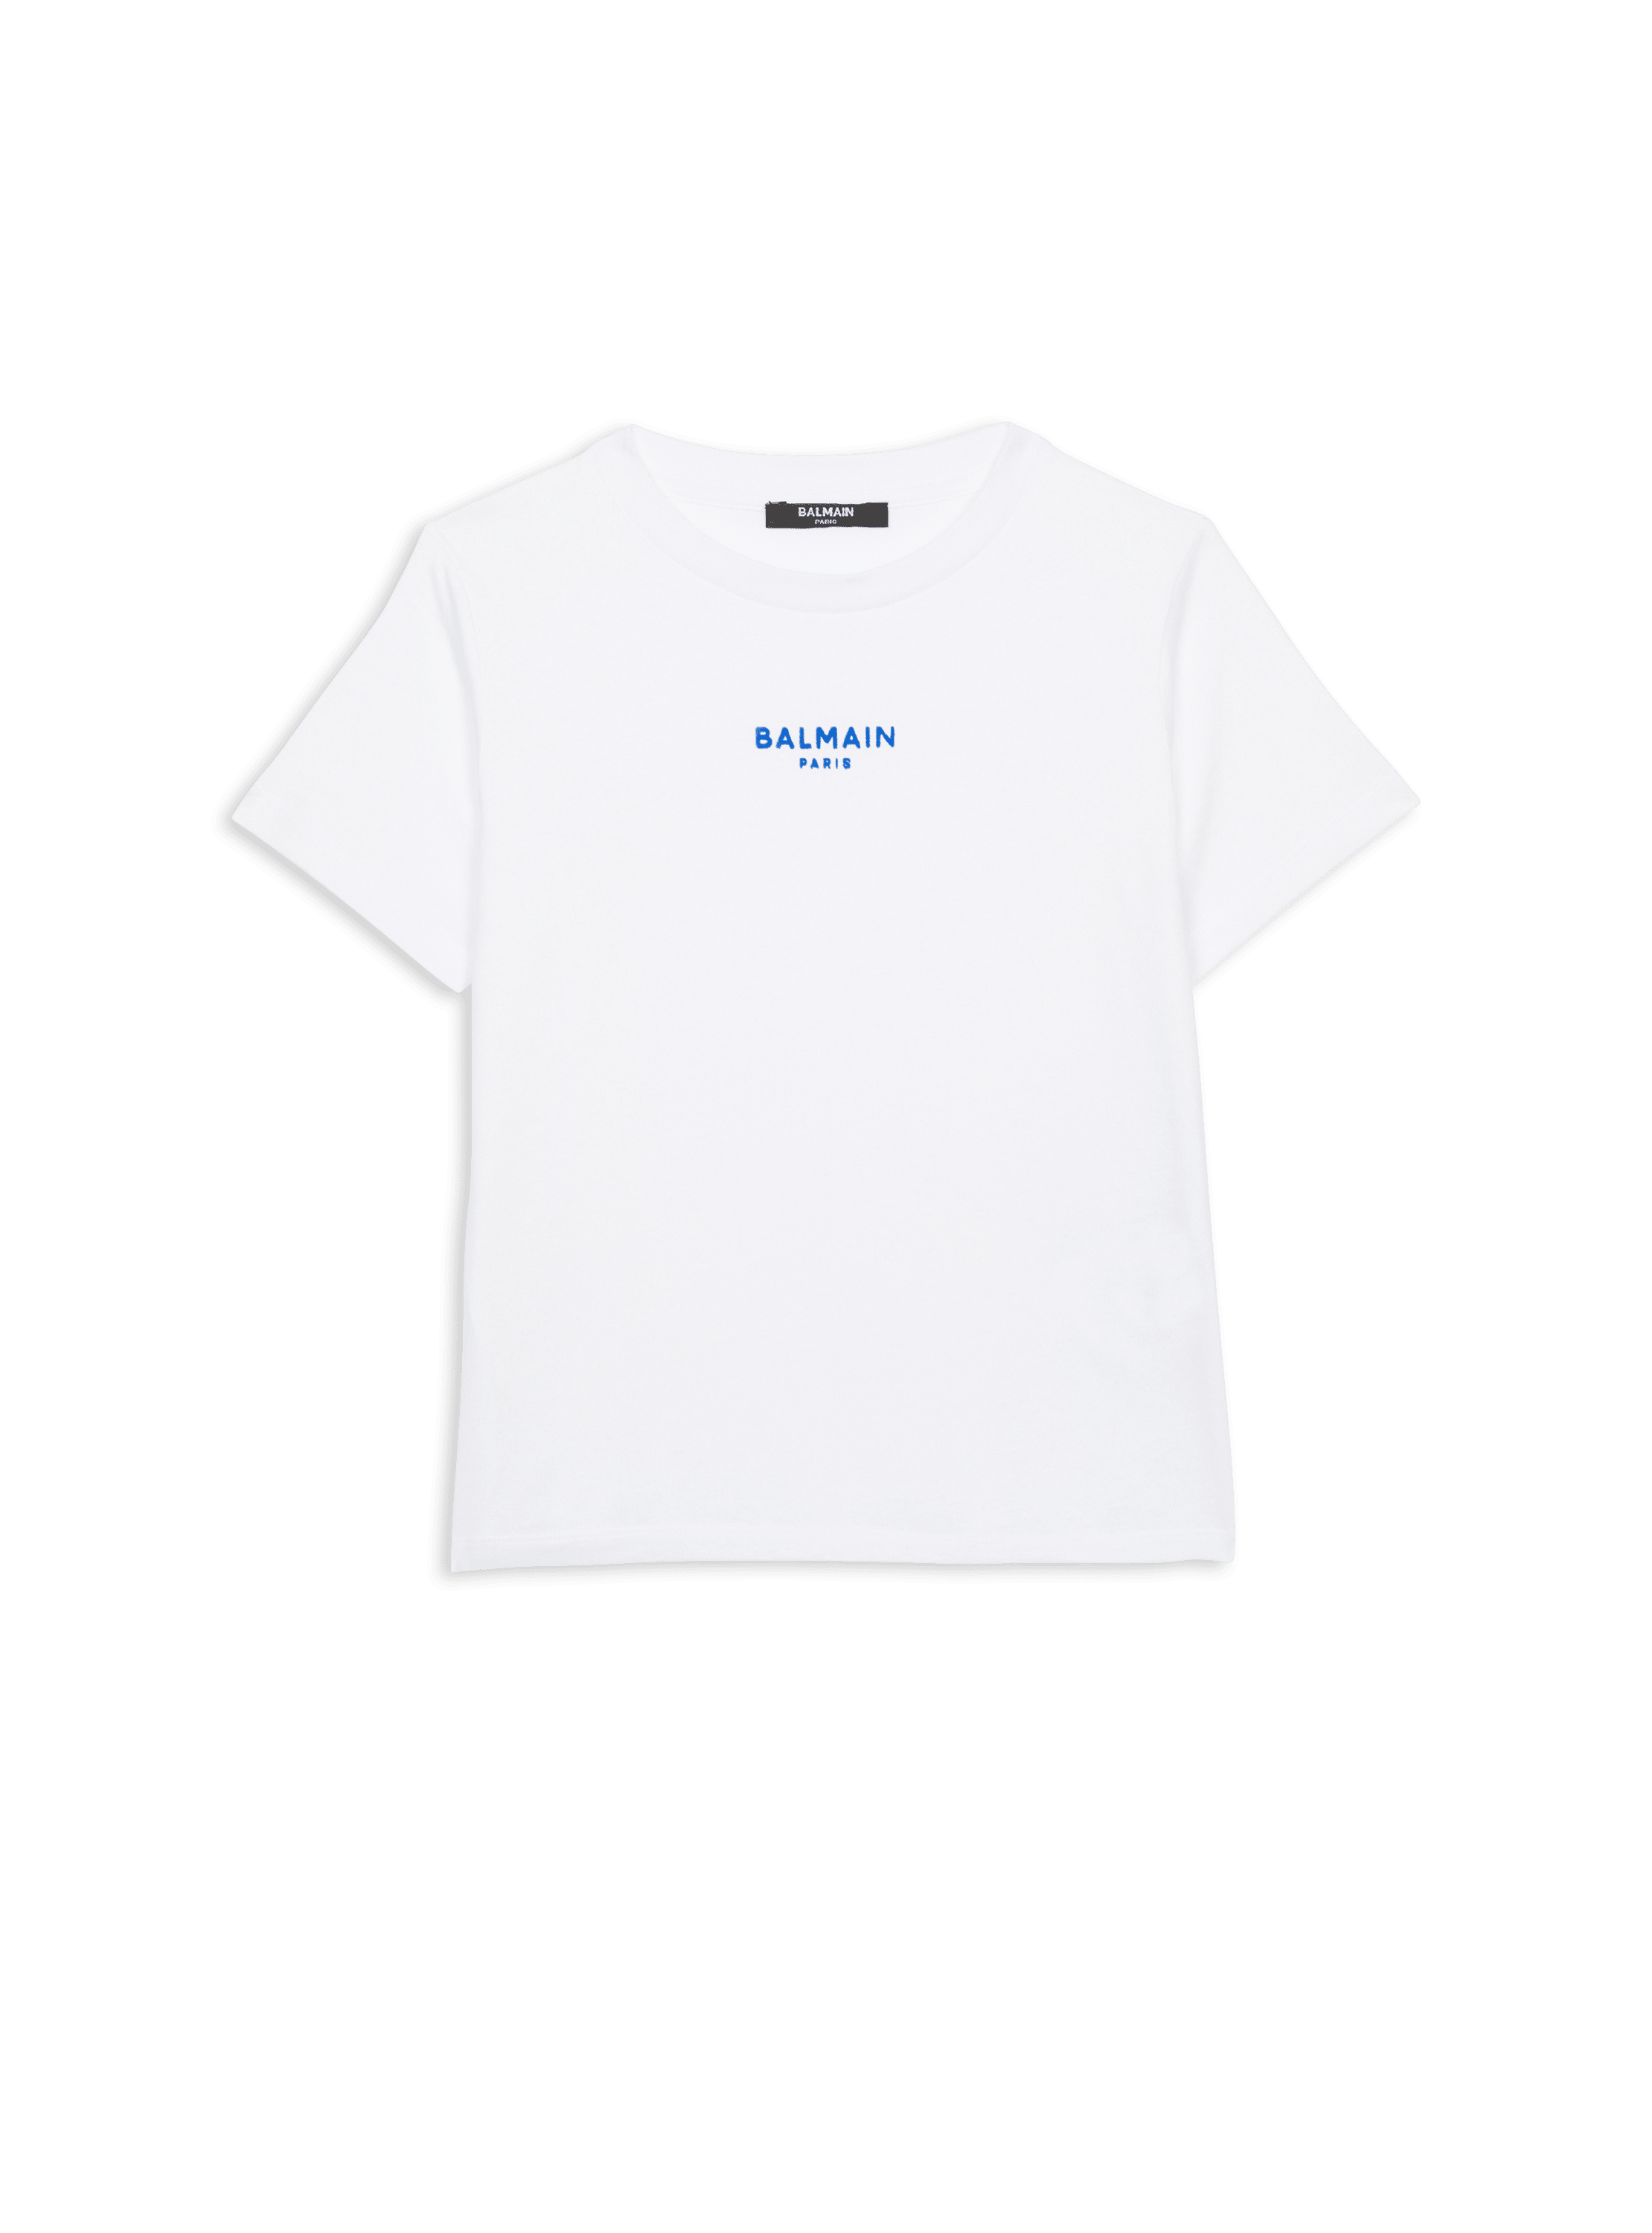 T-Shirt mit beflocktem Balmain Paris